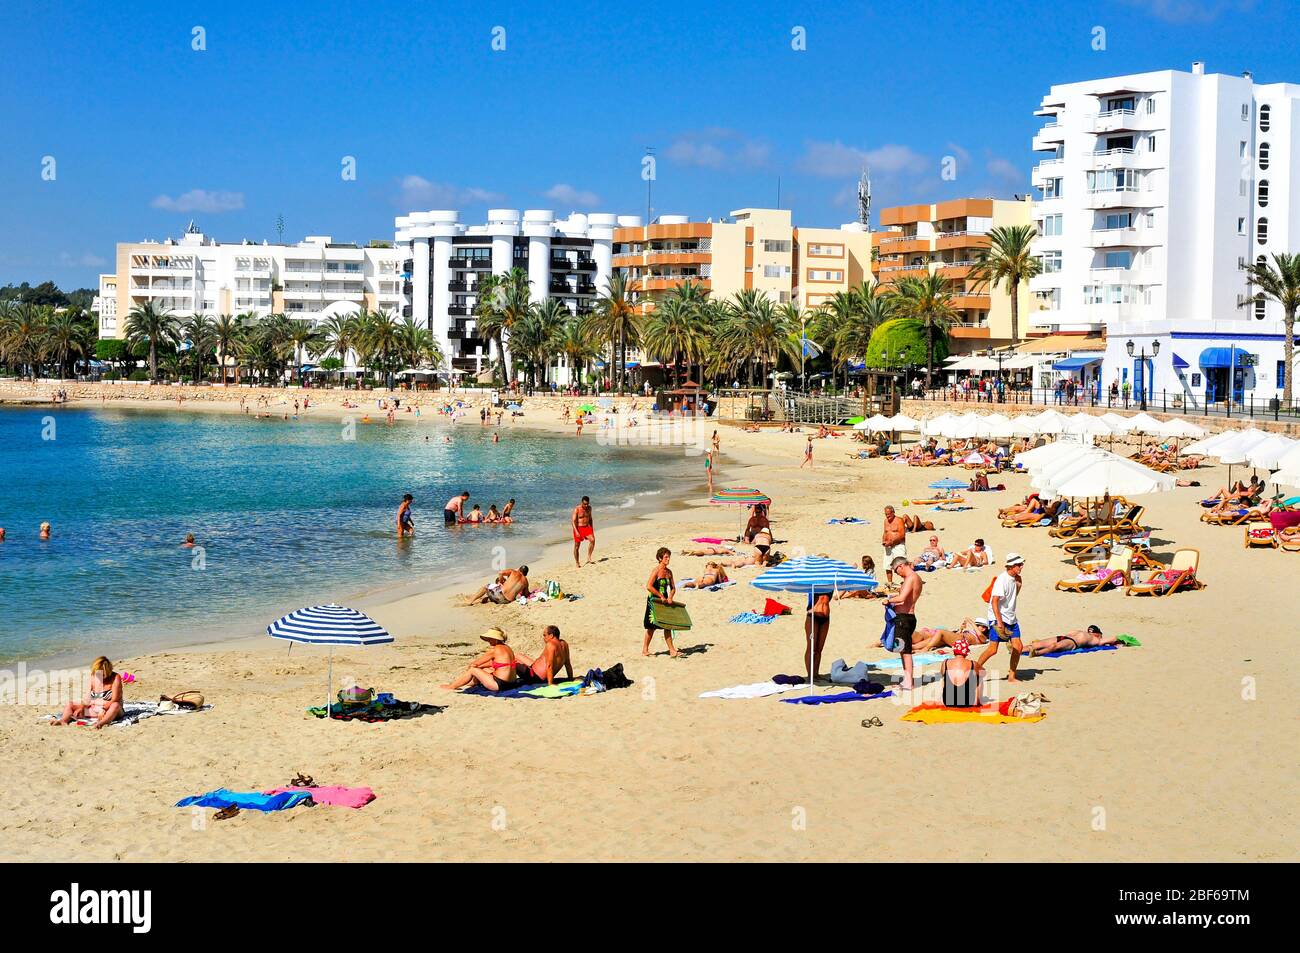 SANTA EULARIA DES RIU, SPANIEN - JUNI 14: Sonnenanbeter am Strand von Santa Eulalia am 14. Juni 2015 in Santa Eularia des Riu, auf Ibiza, Spanien. Ibiza ist Stockfoto